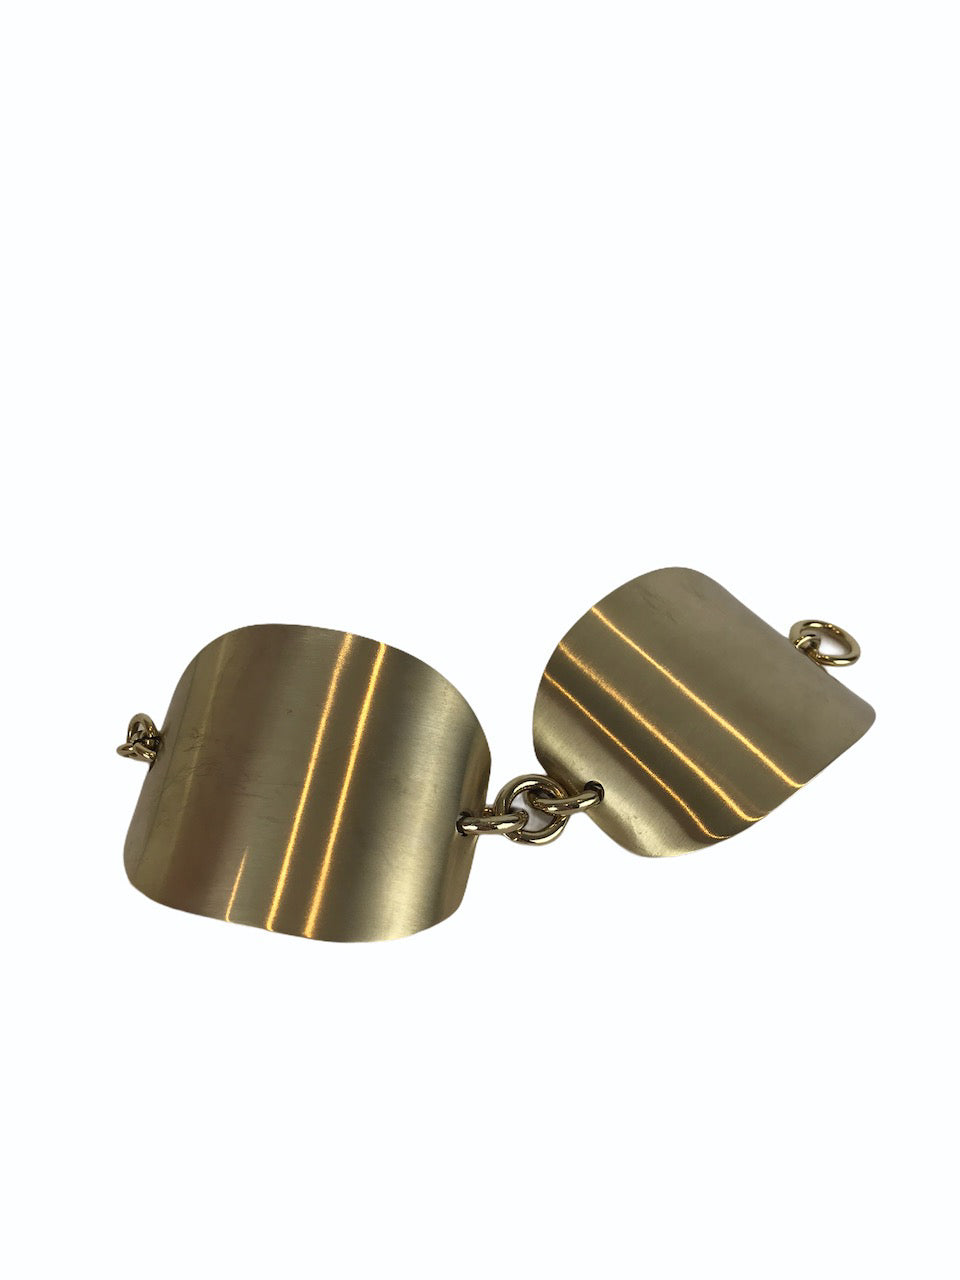 Malene Birger Goldtone Cuff / Bracelet  - As Seen On Instagram 09/09/2020 - Siopaella Designer Exchange